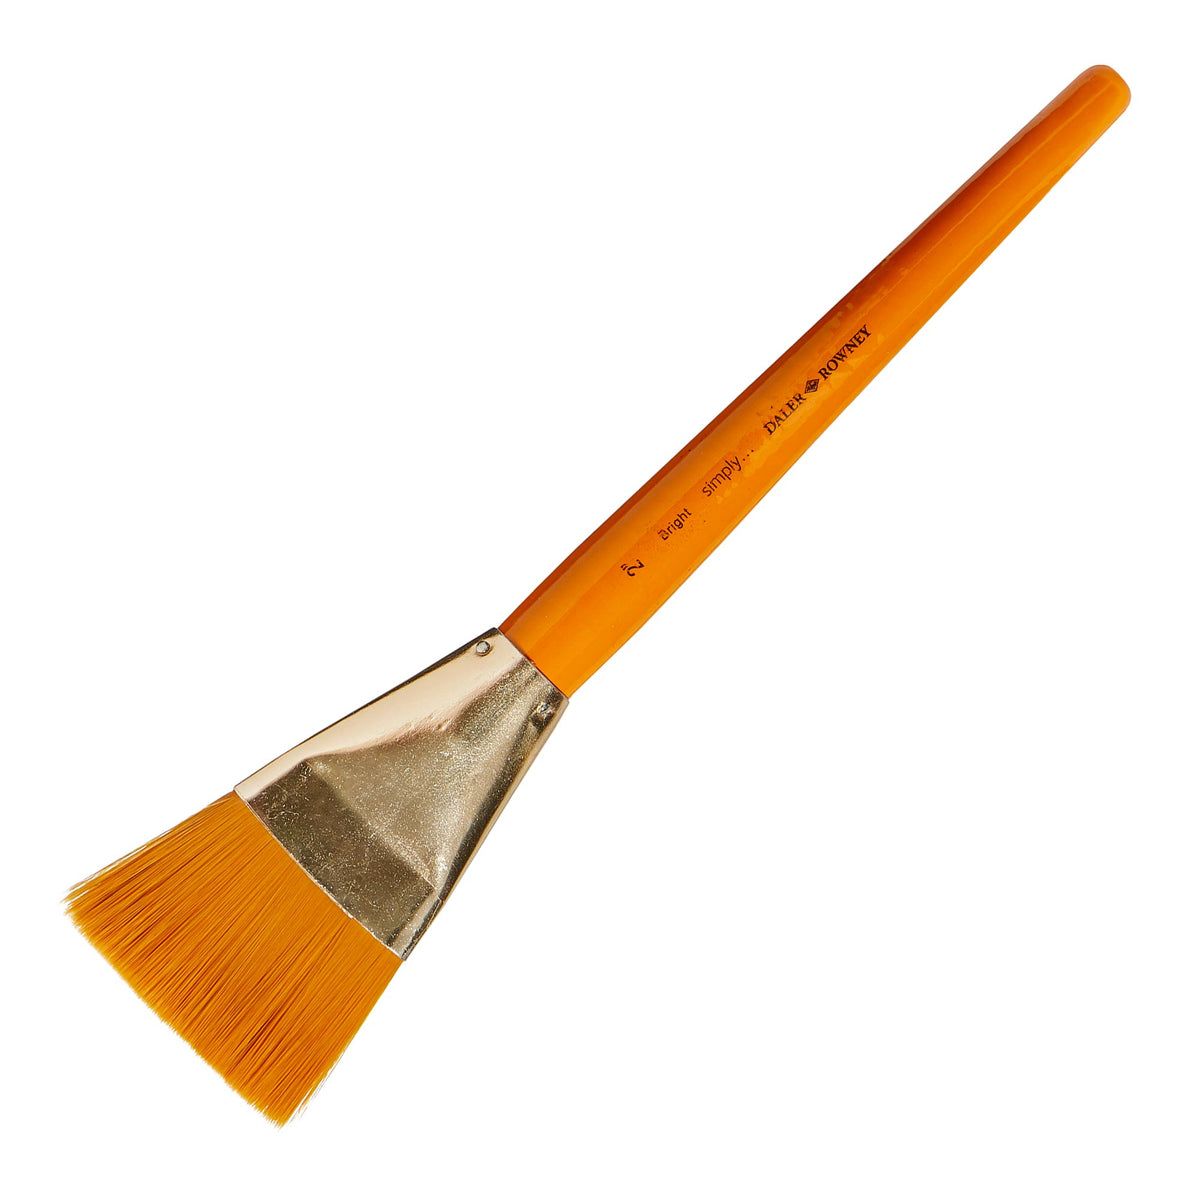 Daler-Rowney Simply Golden Taklon Big Brush